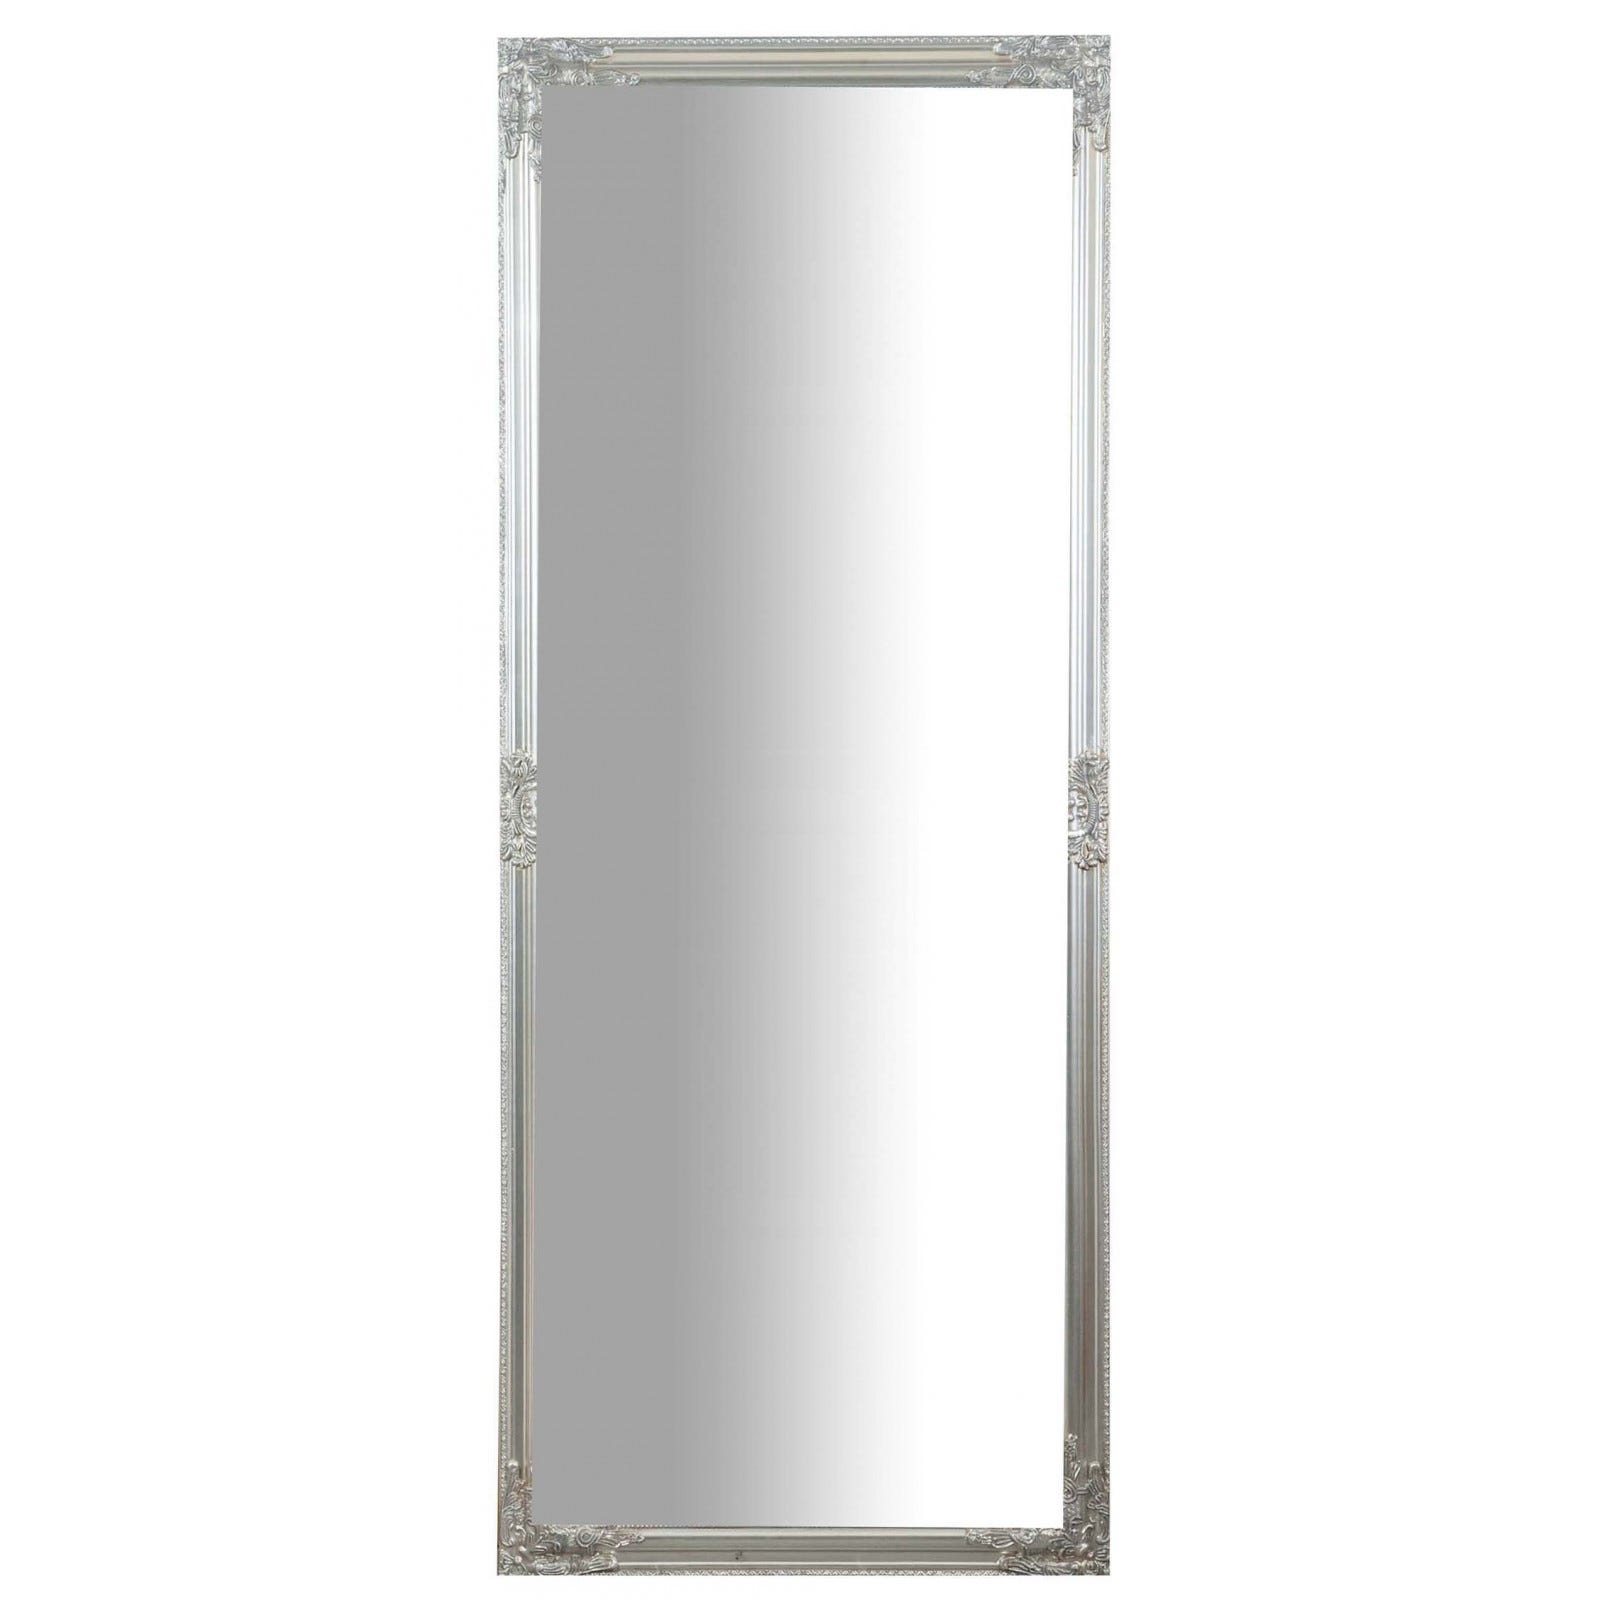 Specchio da parete lungo 180 x 72 x 4 cm